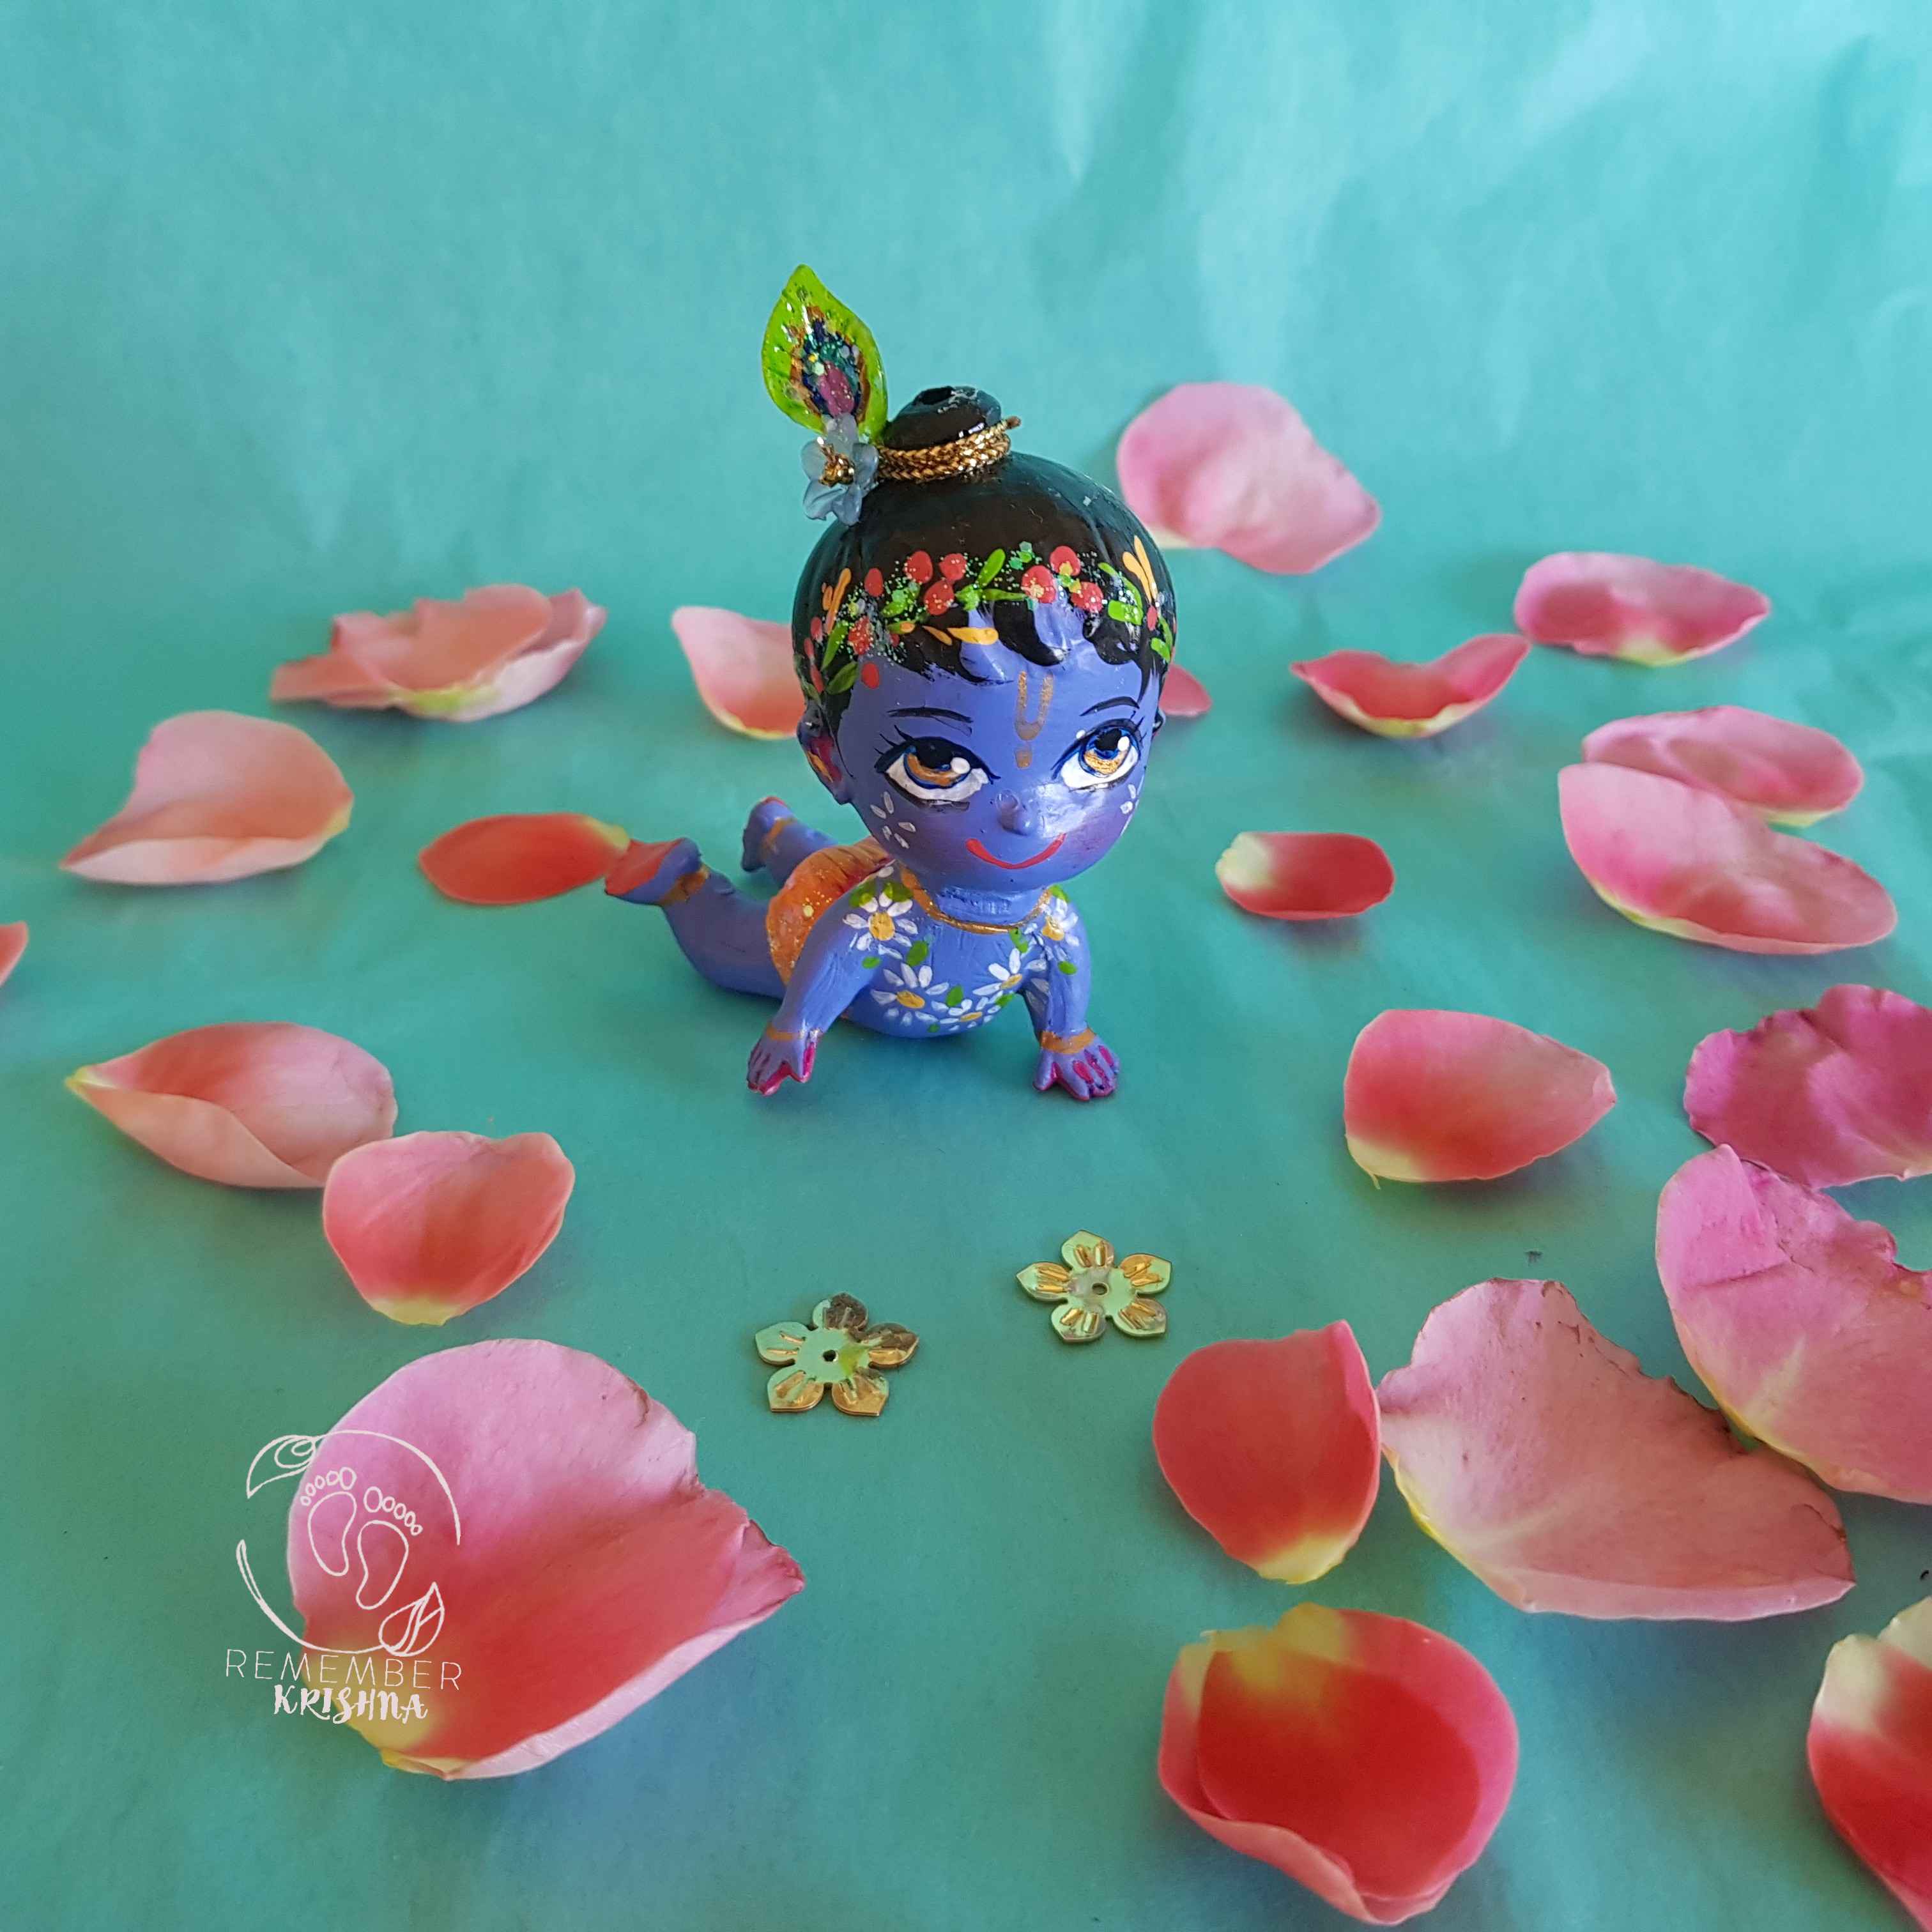 baby krishna doll buy online